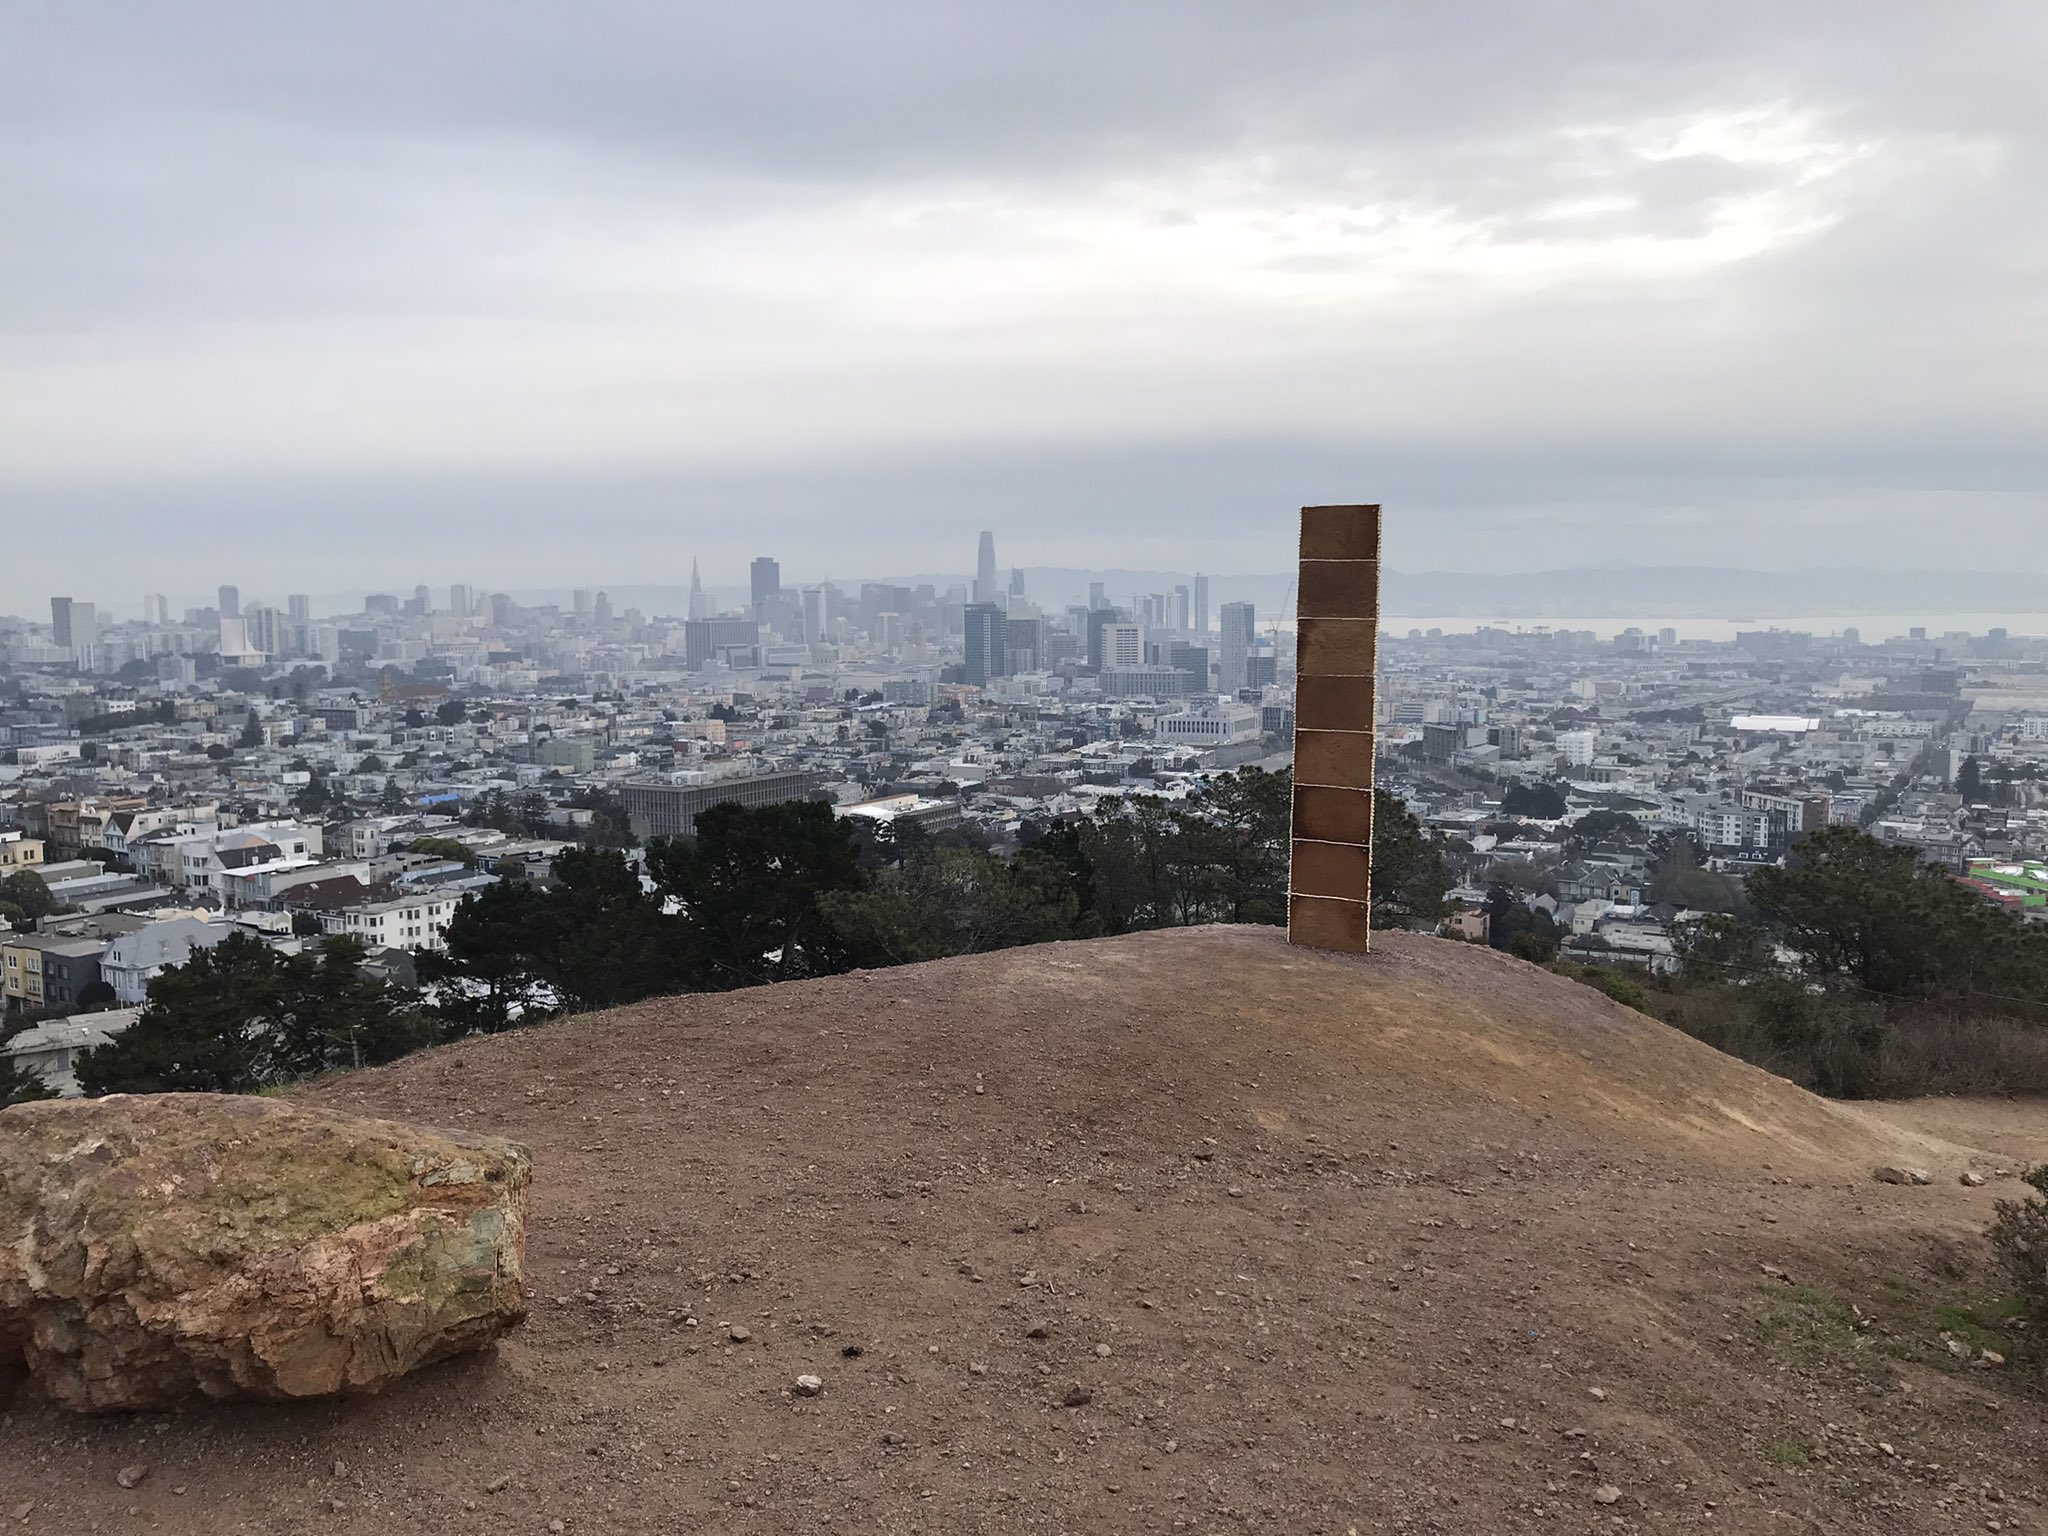 San Francisco gets its own monolith … sorta